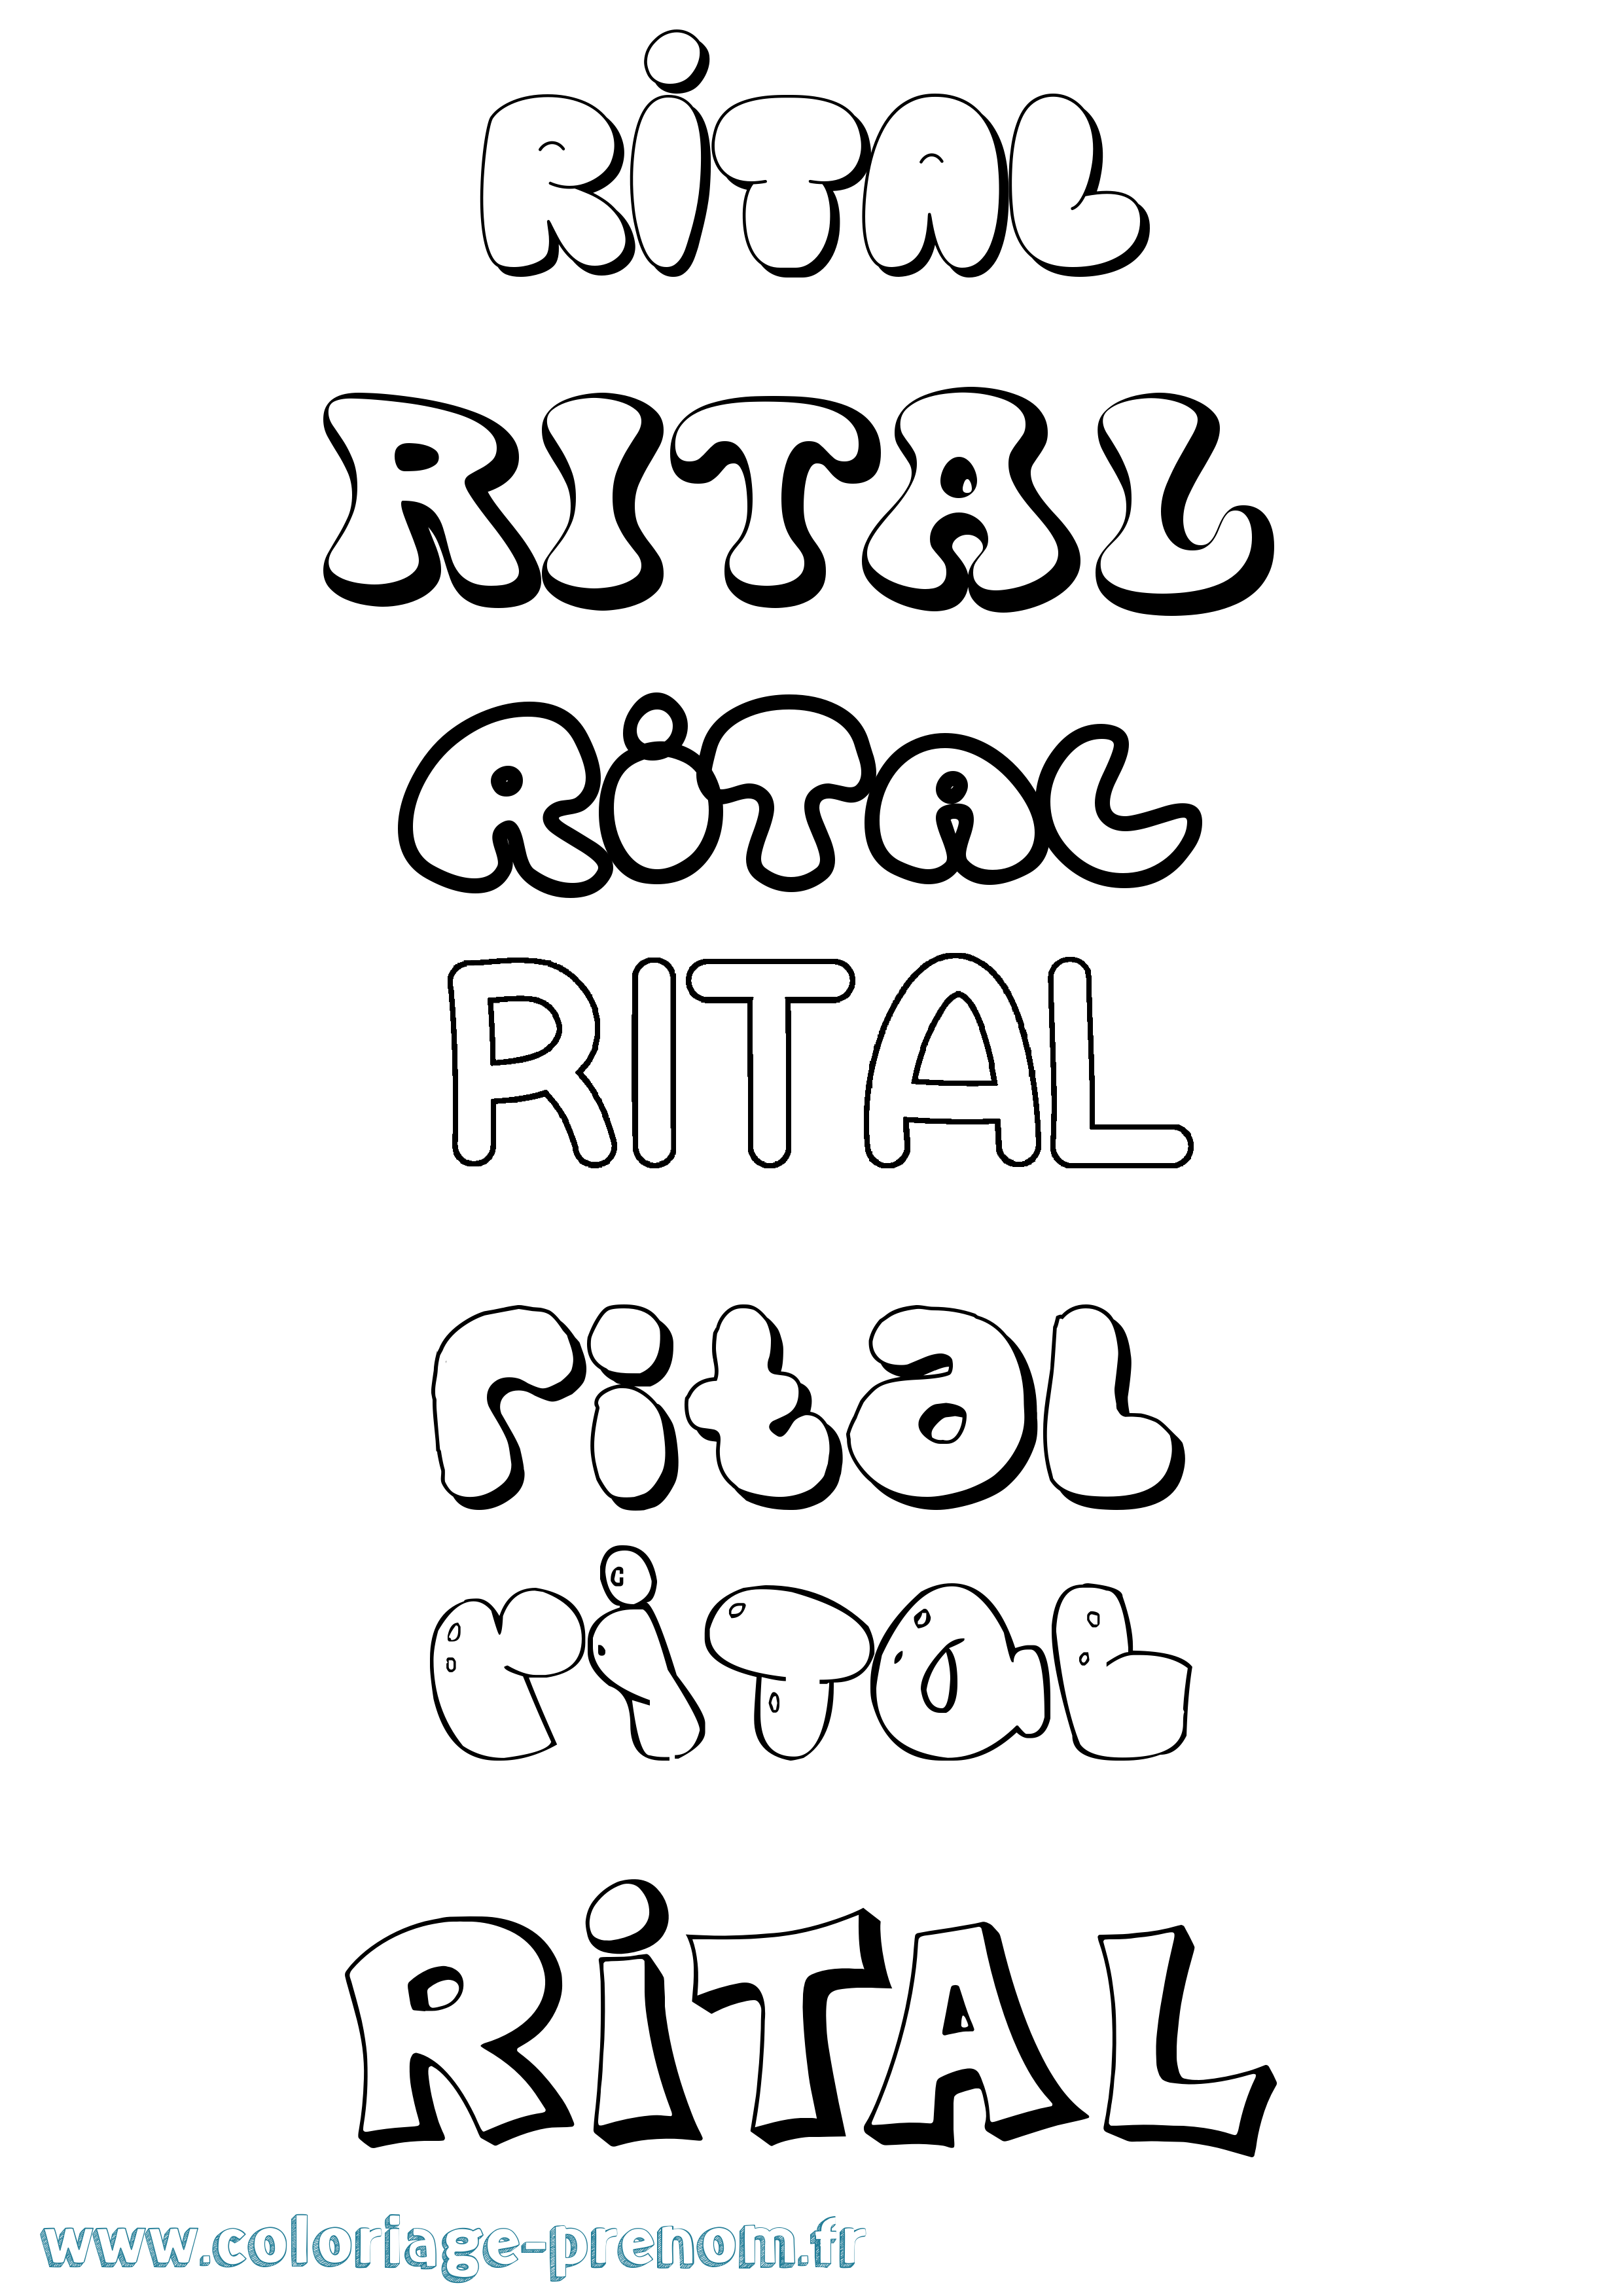 Coloriage prénom Rital Bubble